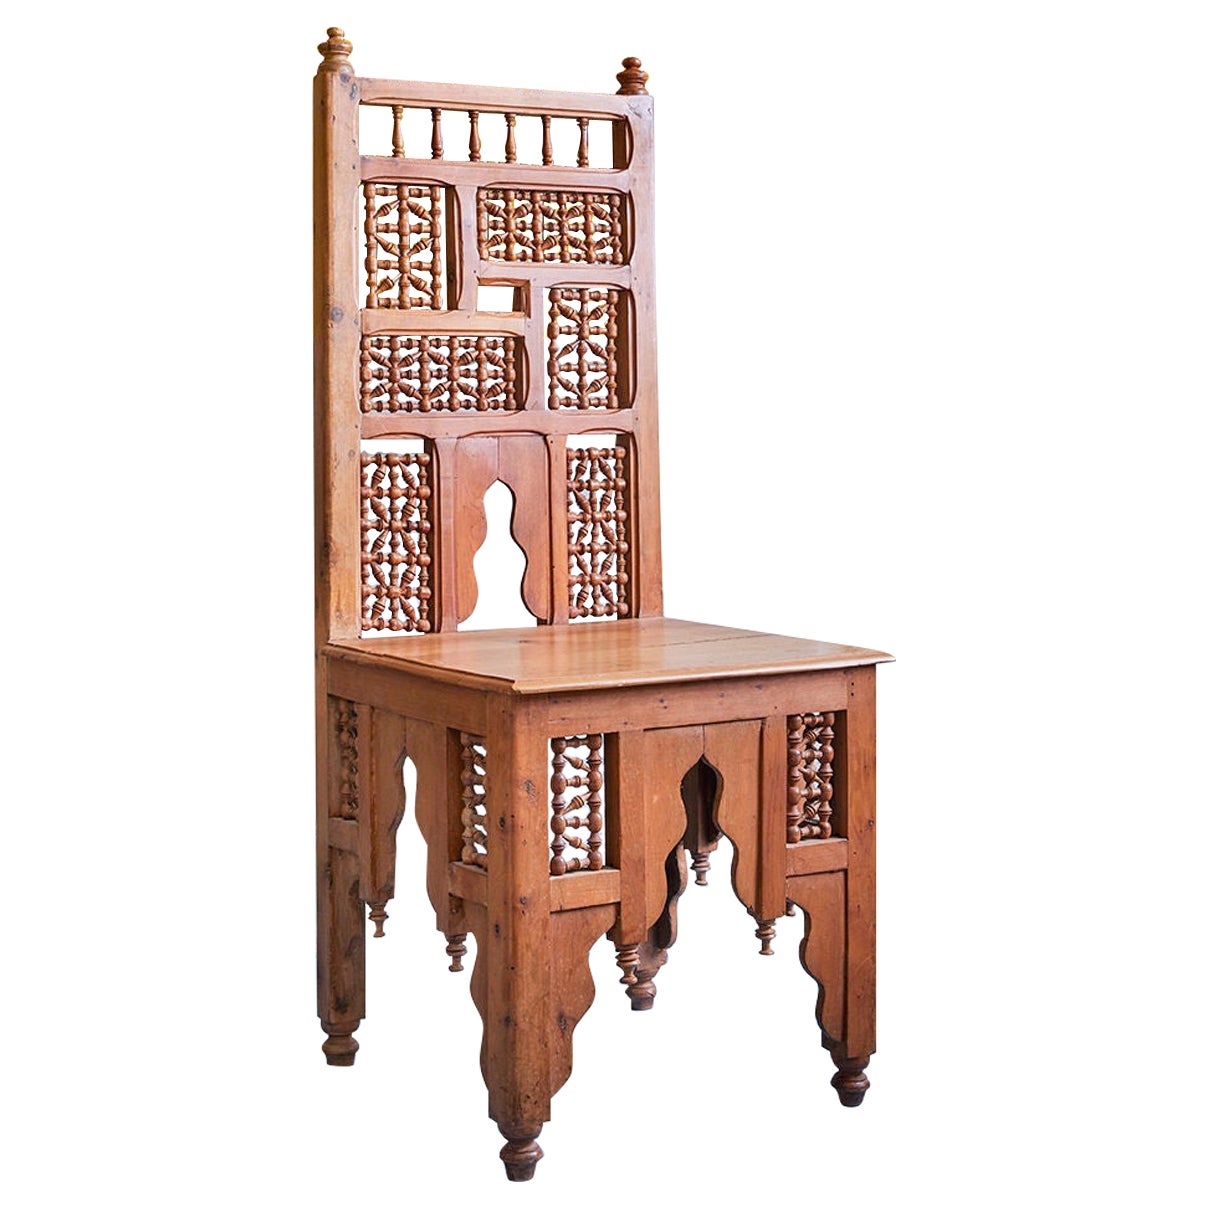 European Cedar Chairs - 15 For Sale on 1stDibs